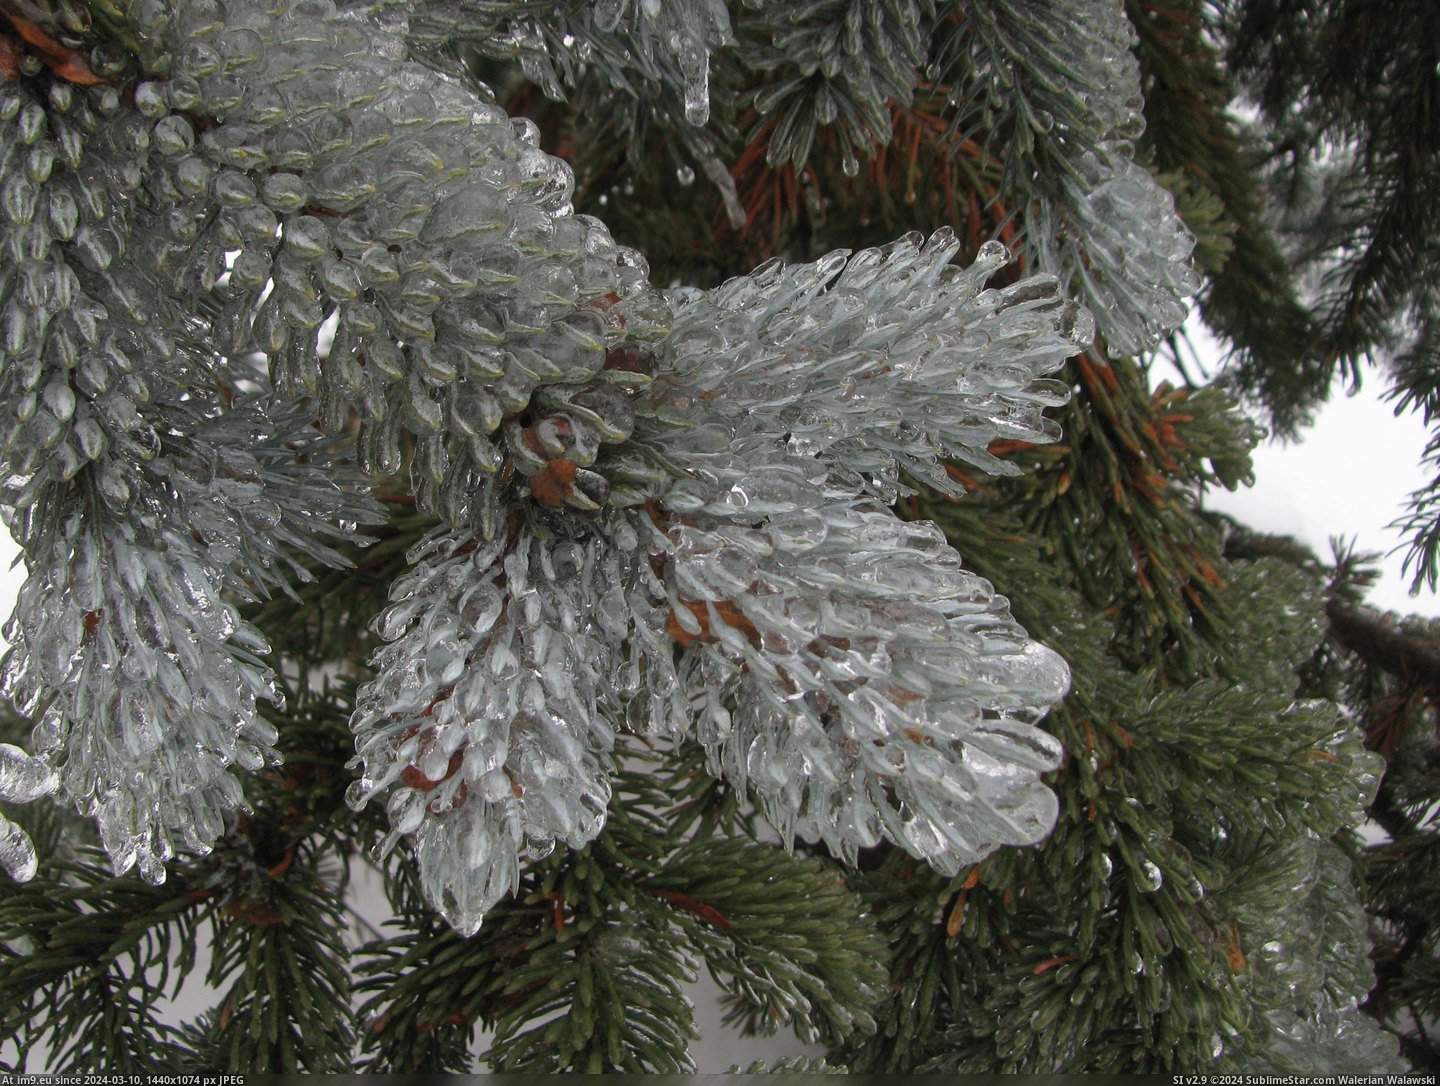 #Tree #Ice #Pine #Encased #Storm #Yard [Pics] The pine tree in my yard is encased in ice after a storm. Pic. (Image of album My r/PICS favs))